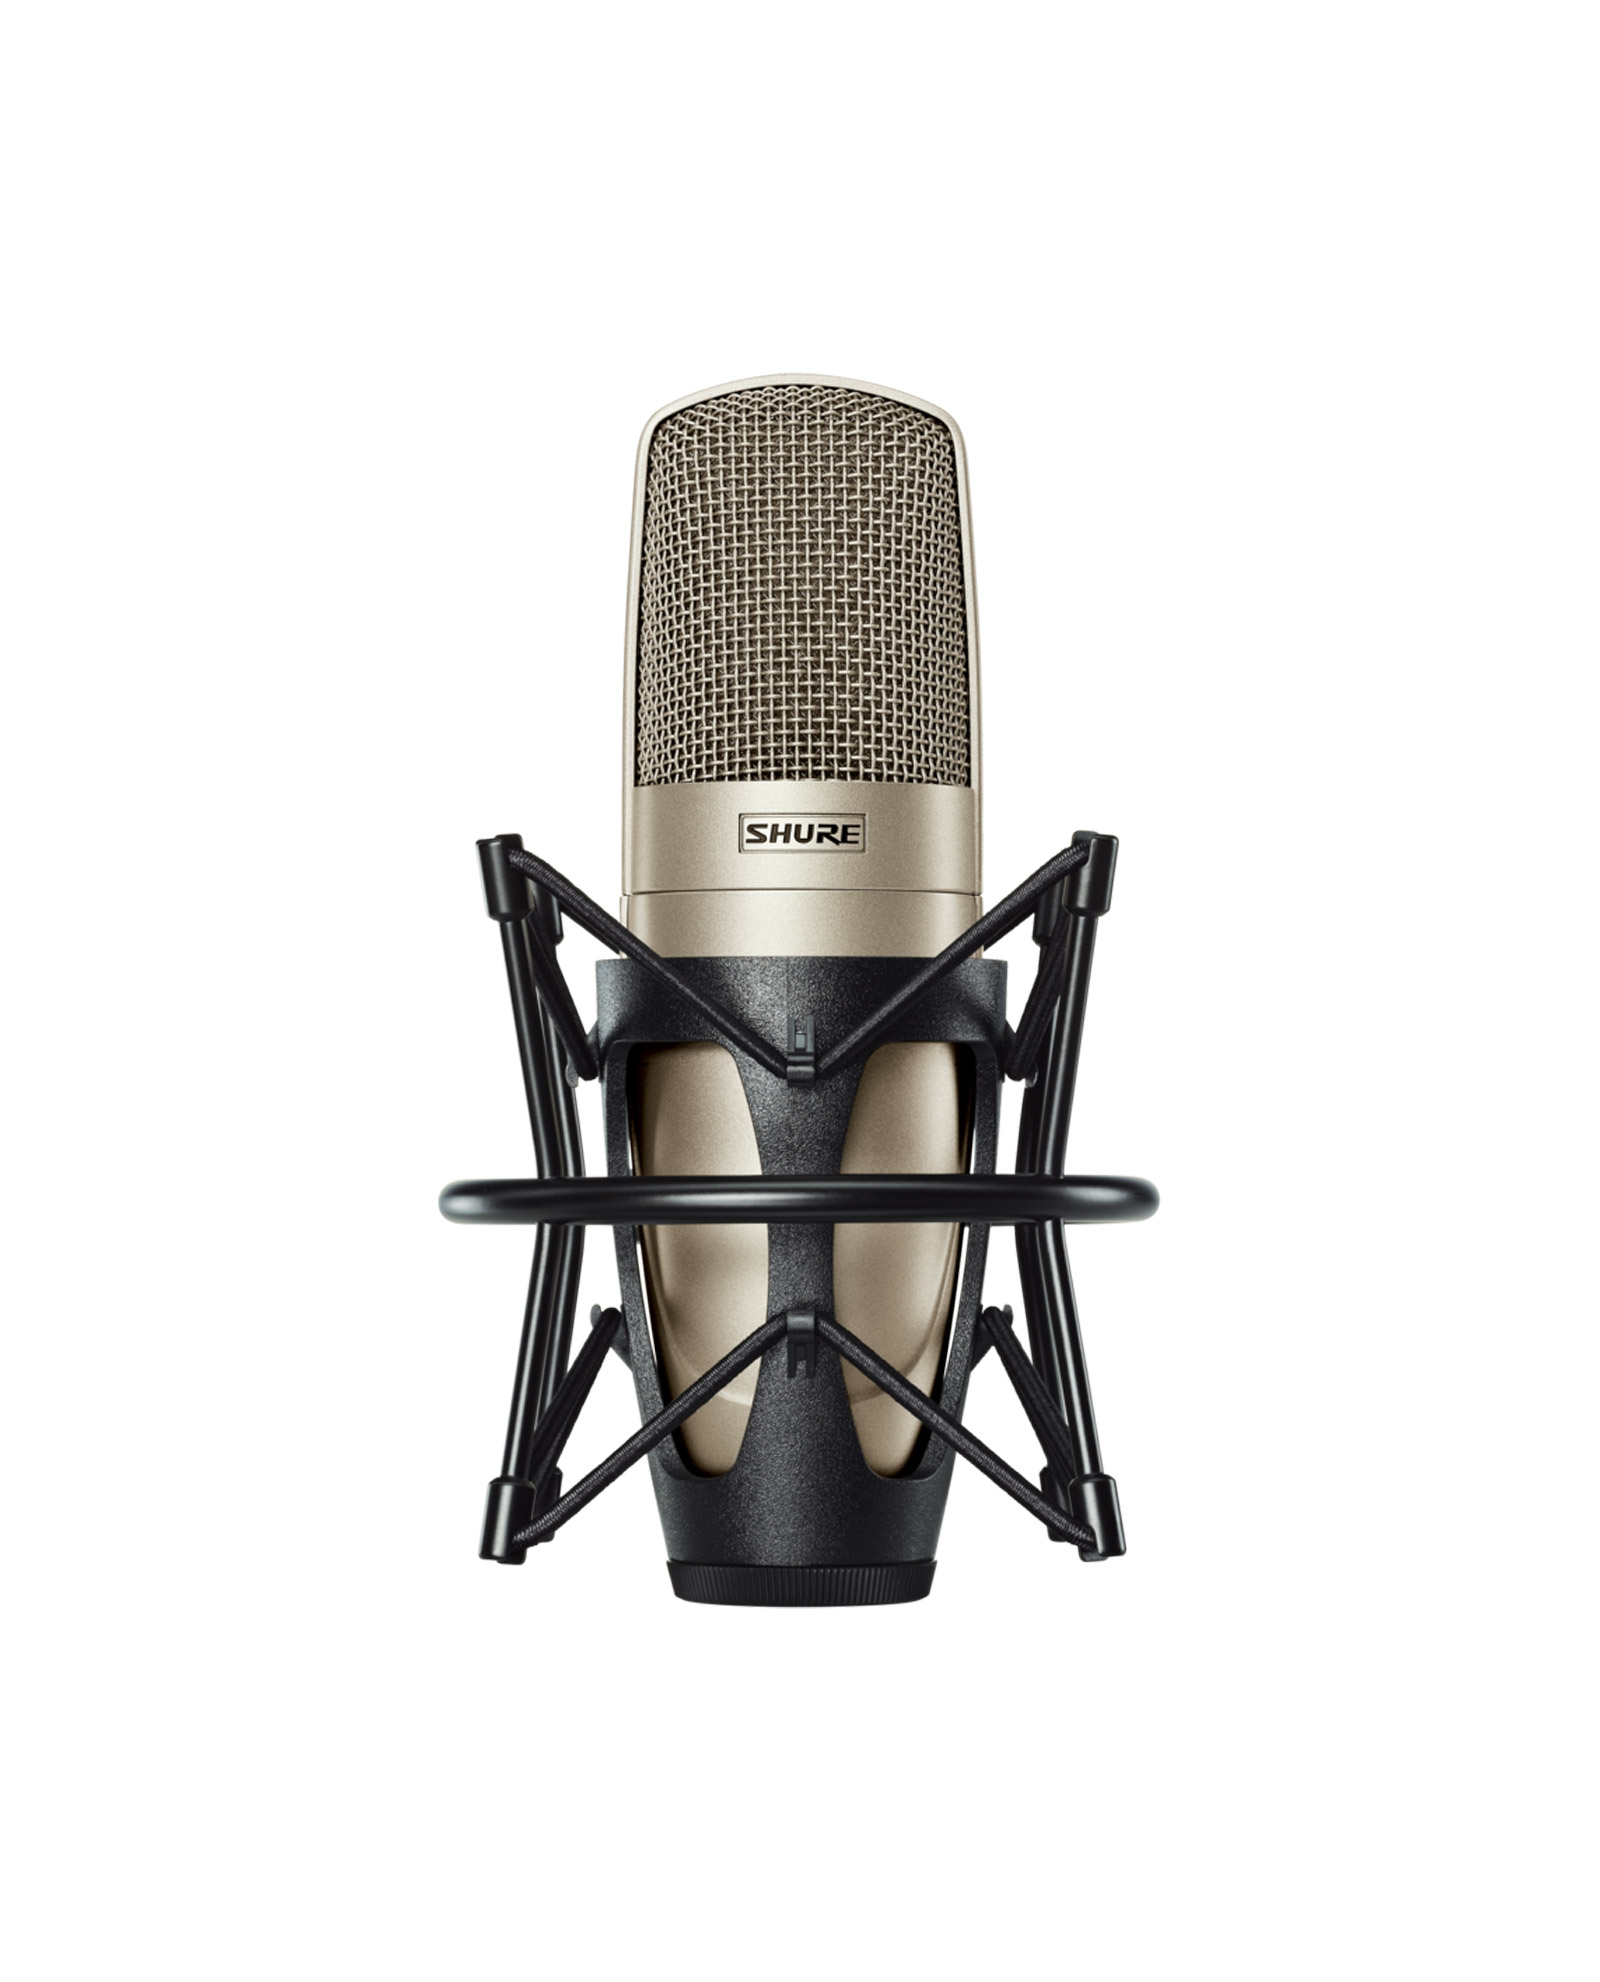 Shure Ksm32 Cardioid Condenser Microphone 3